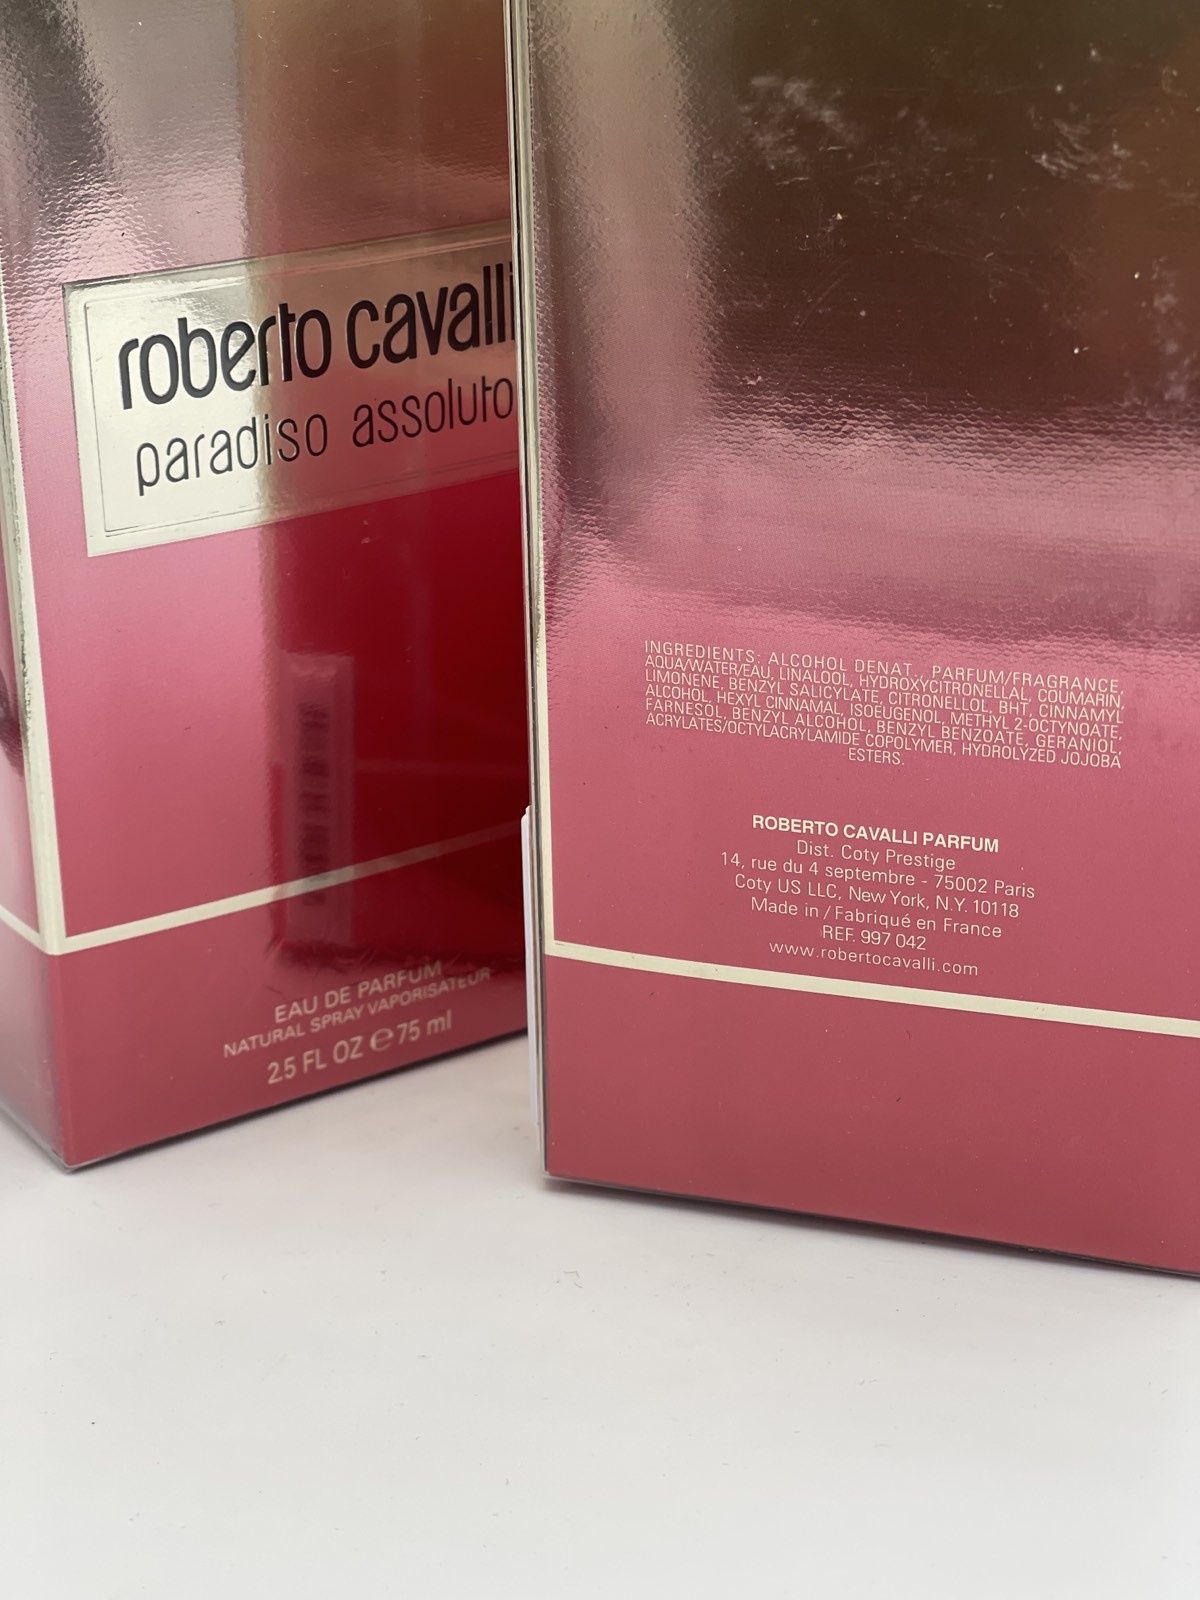 Roberto Cavalli Paradiso Assoluto
Eau de Parfum
75 ml
Стать:для жінок.